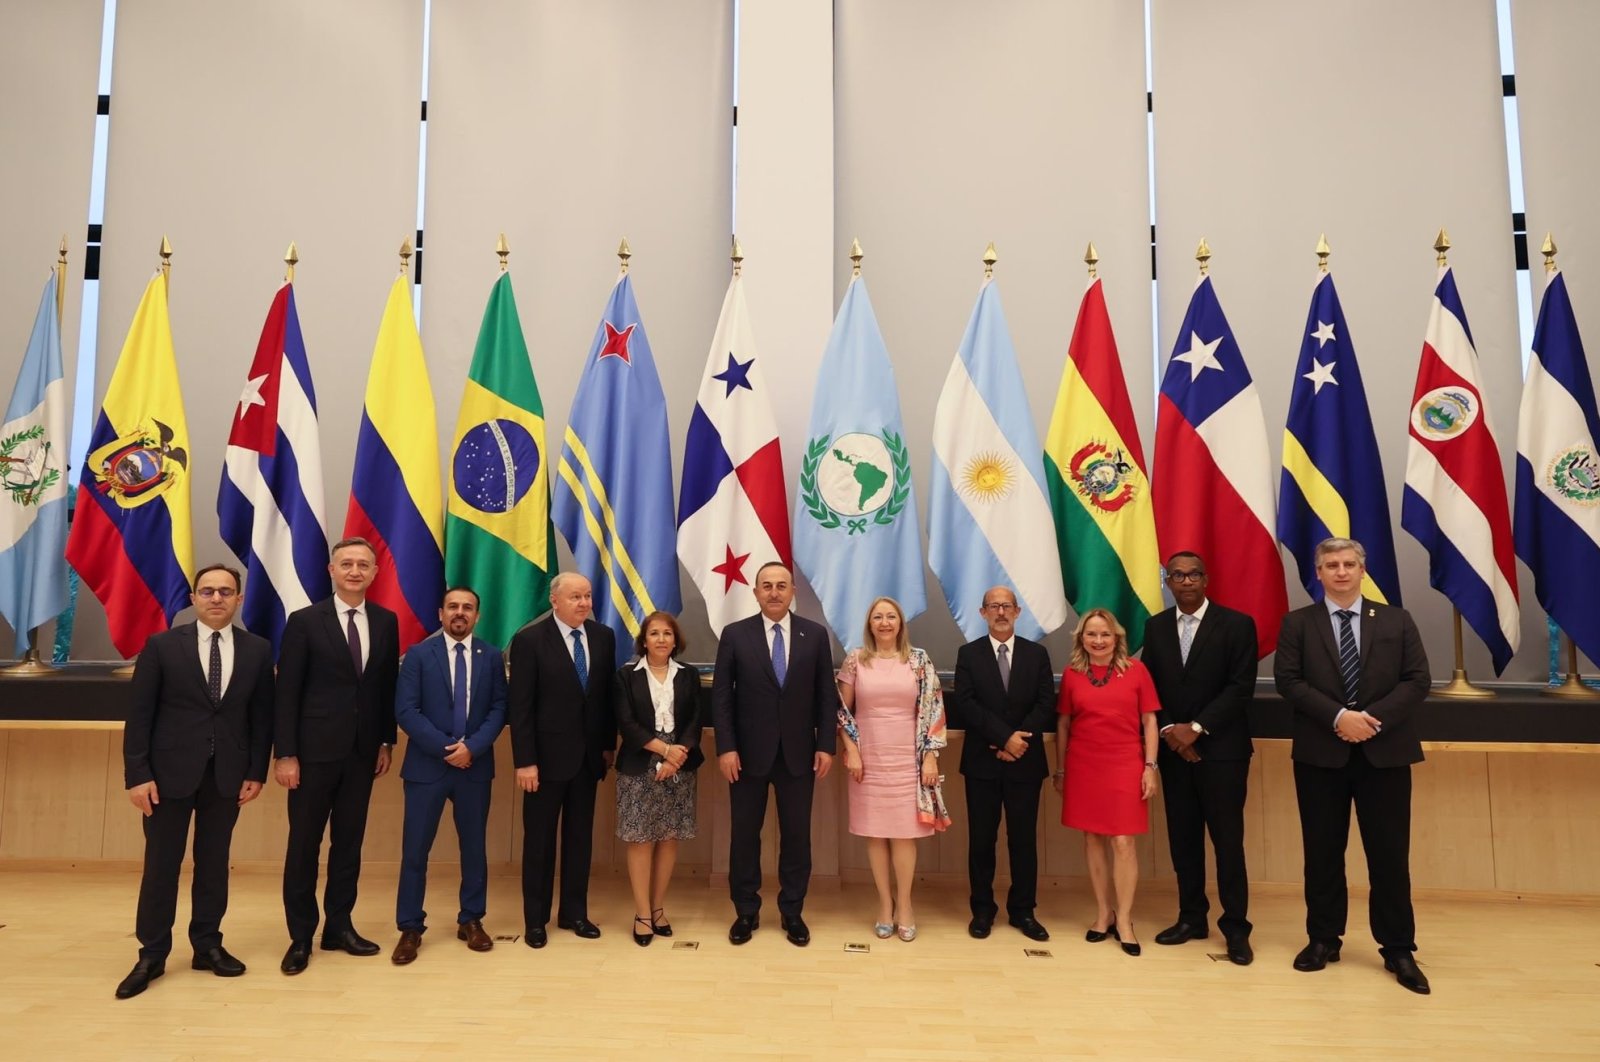 Foreign Minister Mevlüt Çavuşoğlu meets with members of Parlatino in Panama, April 27, 2022. (IHA Photo)